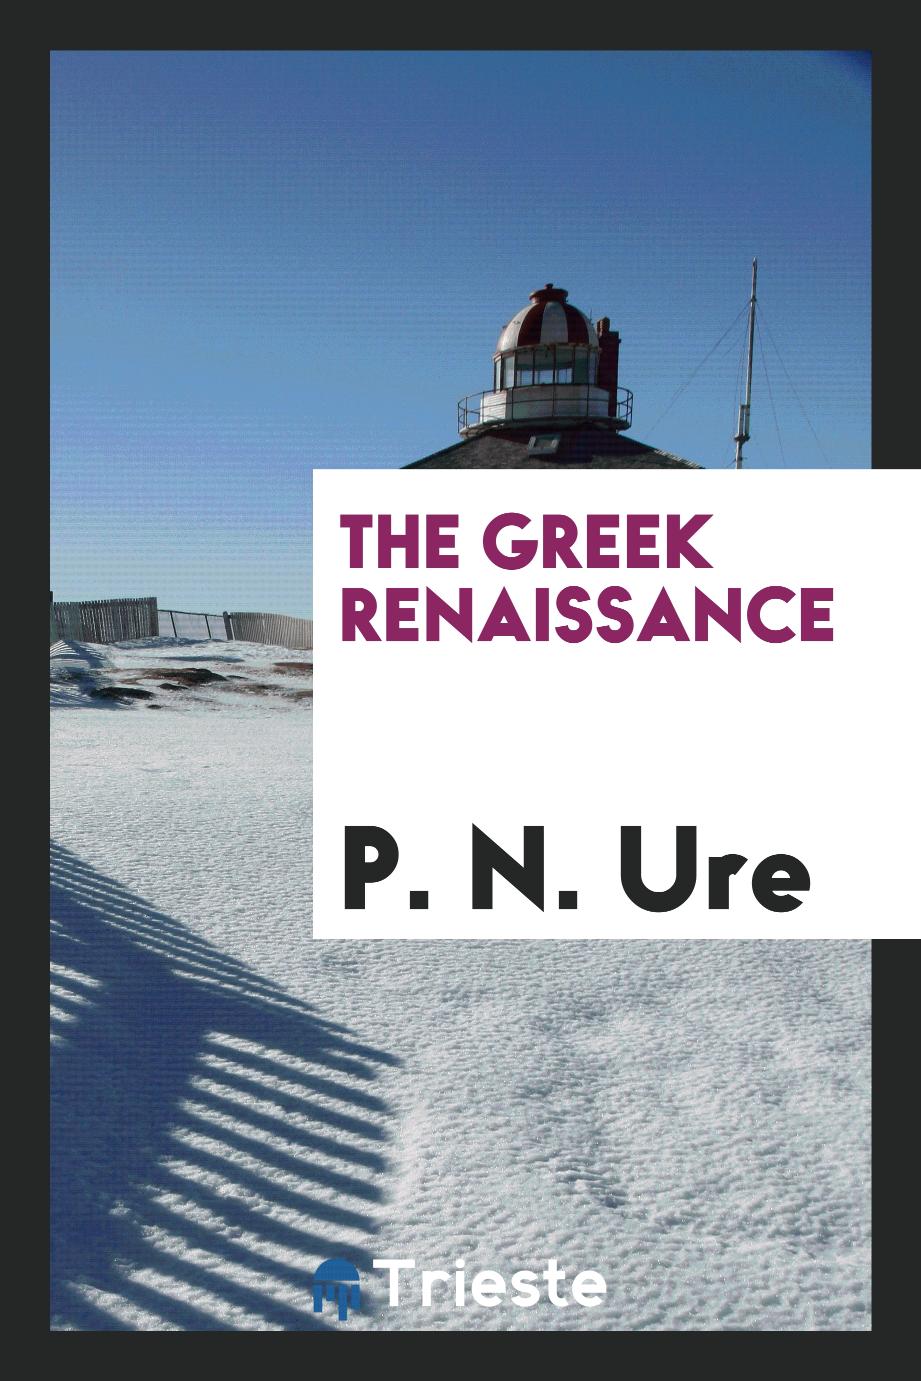 The Greek renaissance